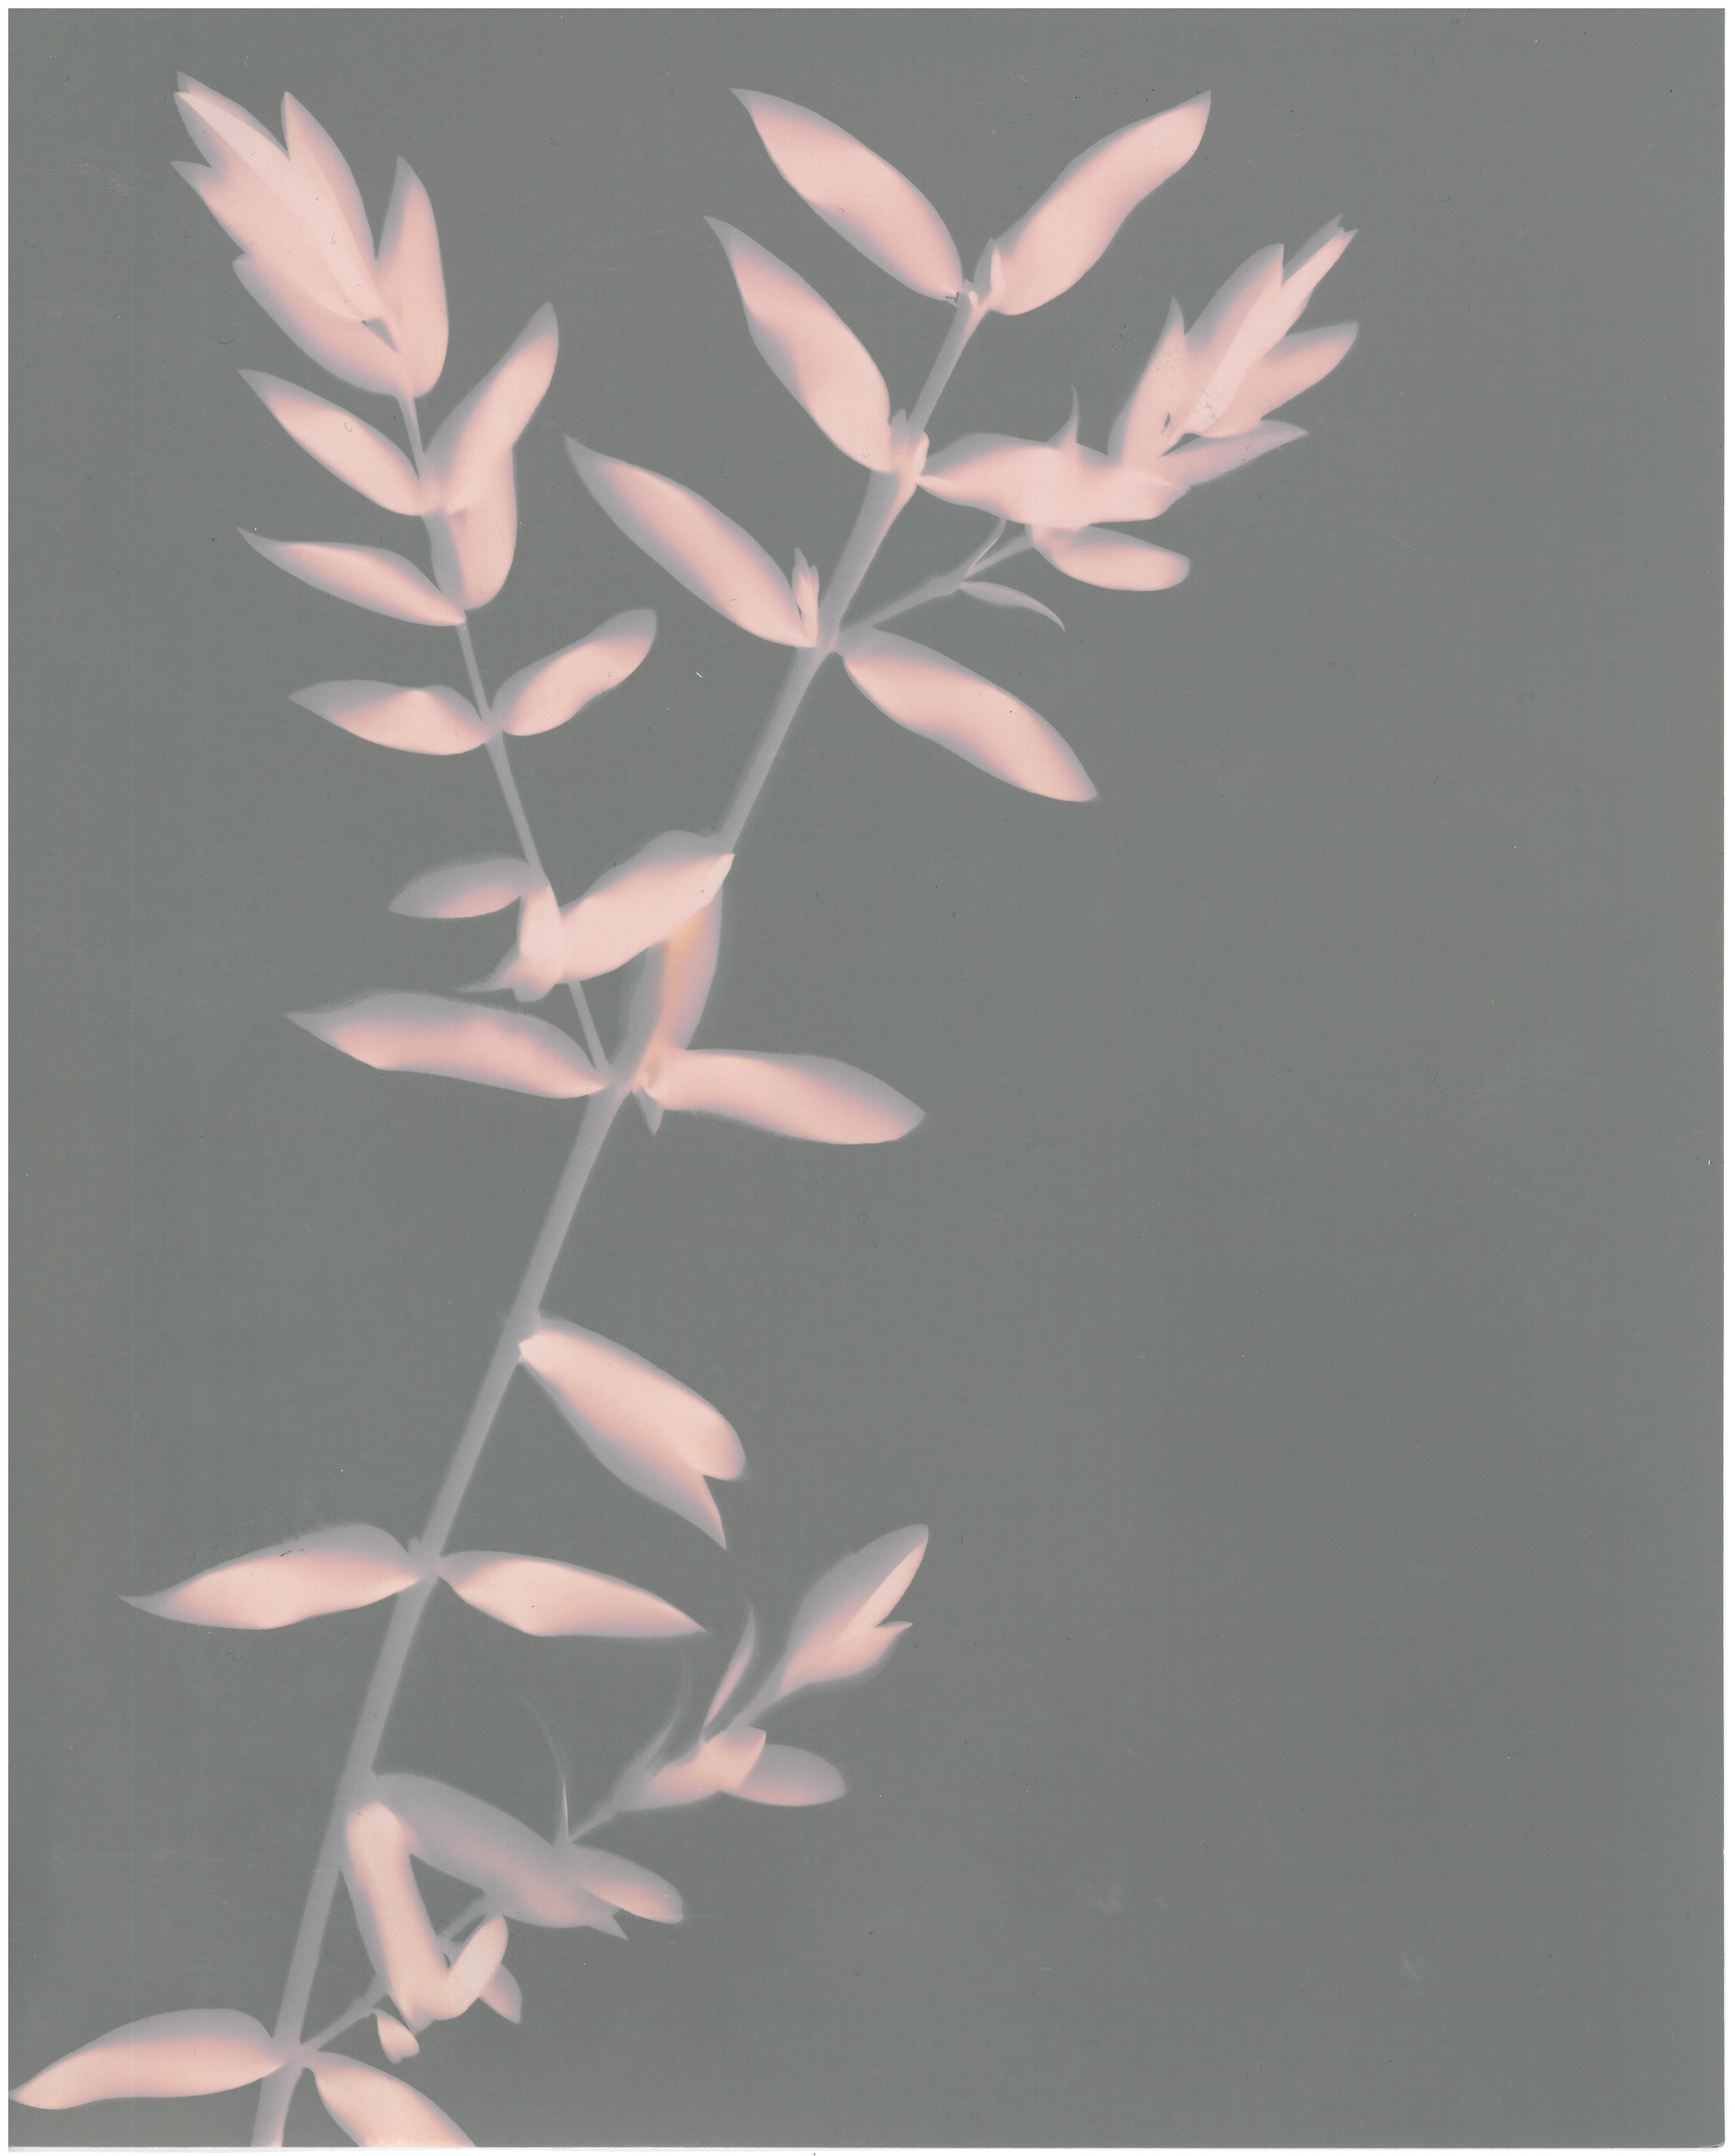  Stephanie Richter  Untitled (backyard lumen experiment 1 - Bottlebrush)&nbsp; &nbsp;2017 gelatin silver print 20.3 x 25.4 cm 